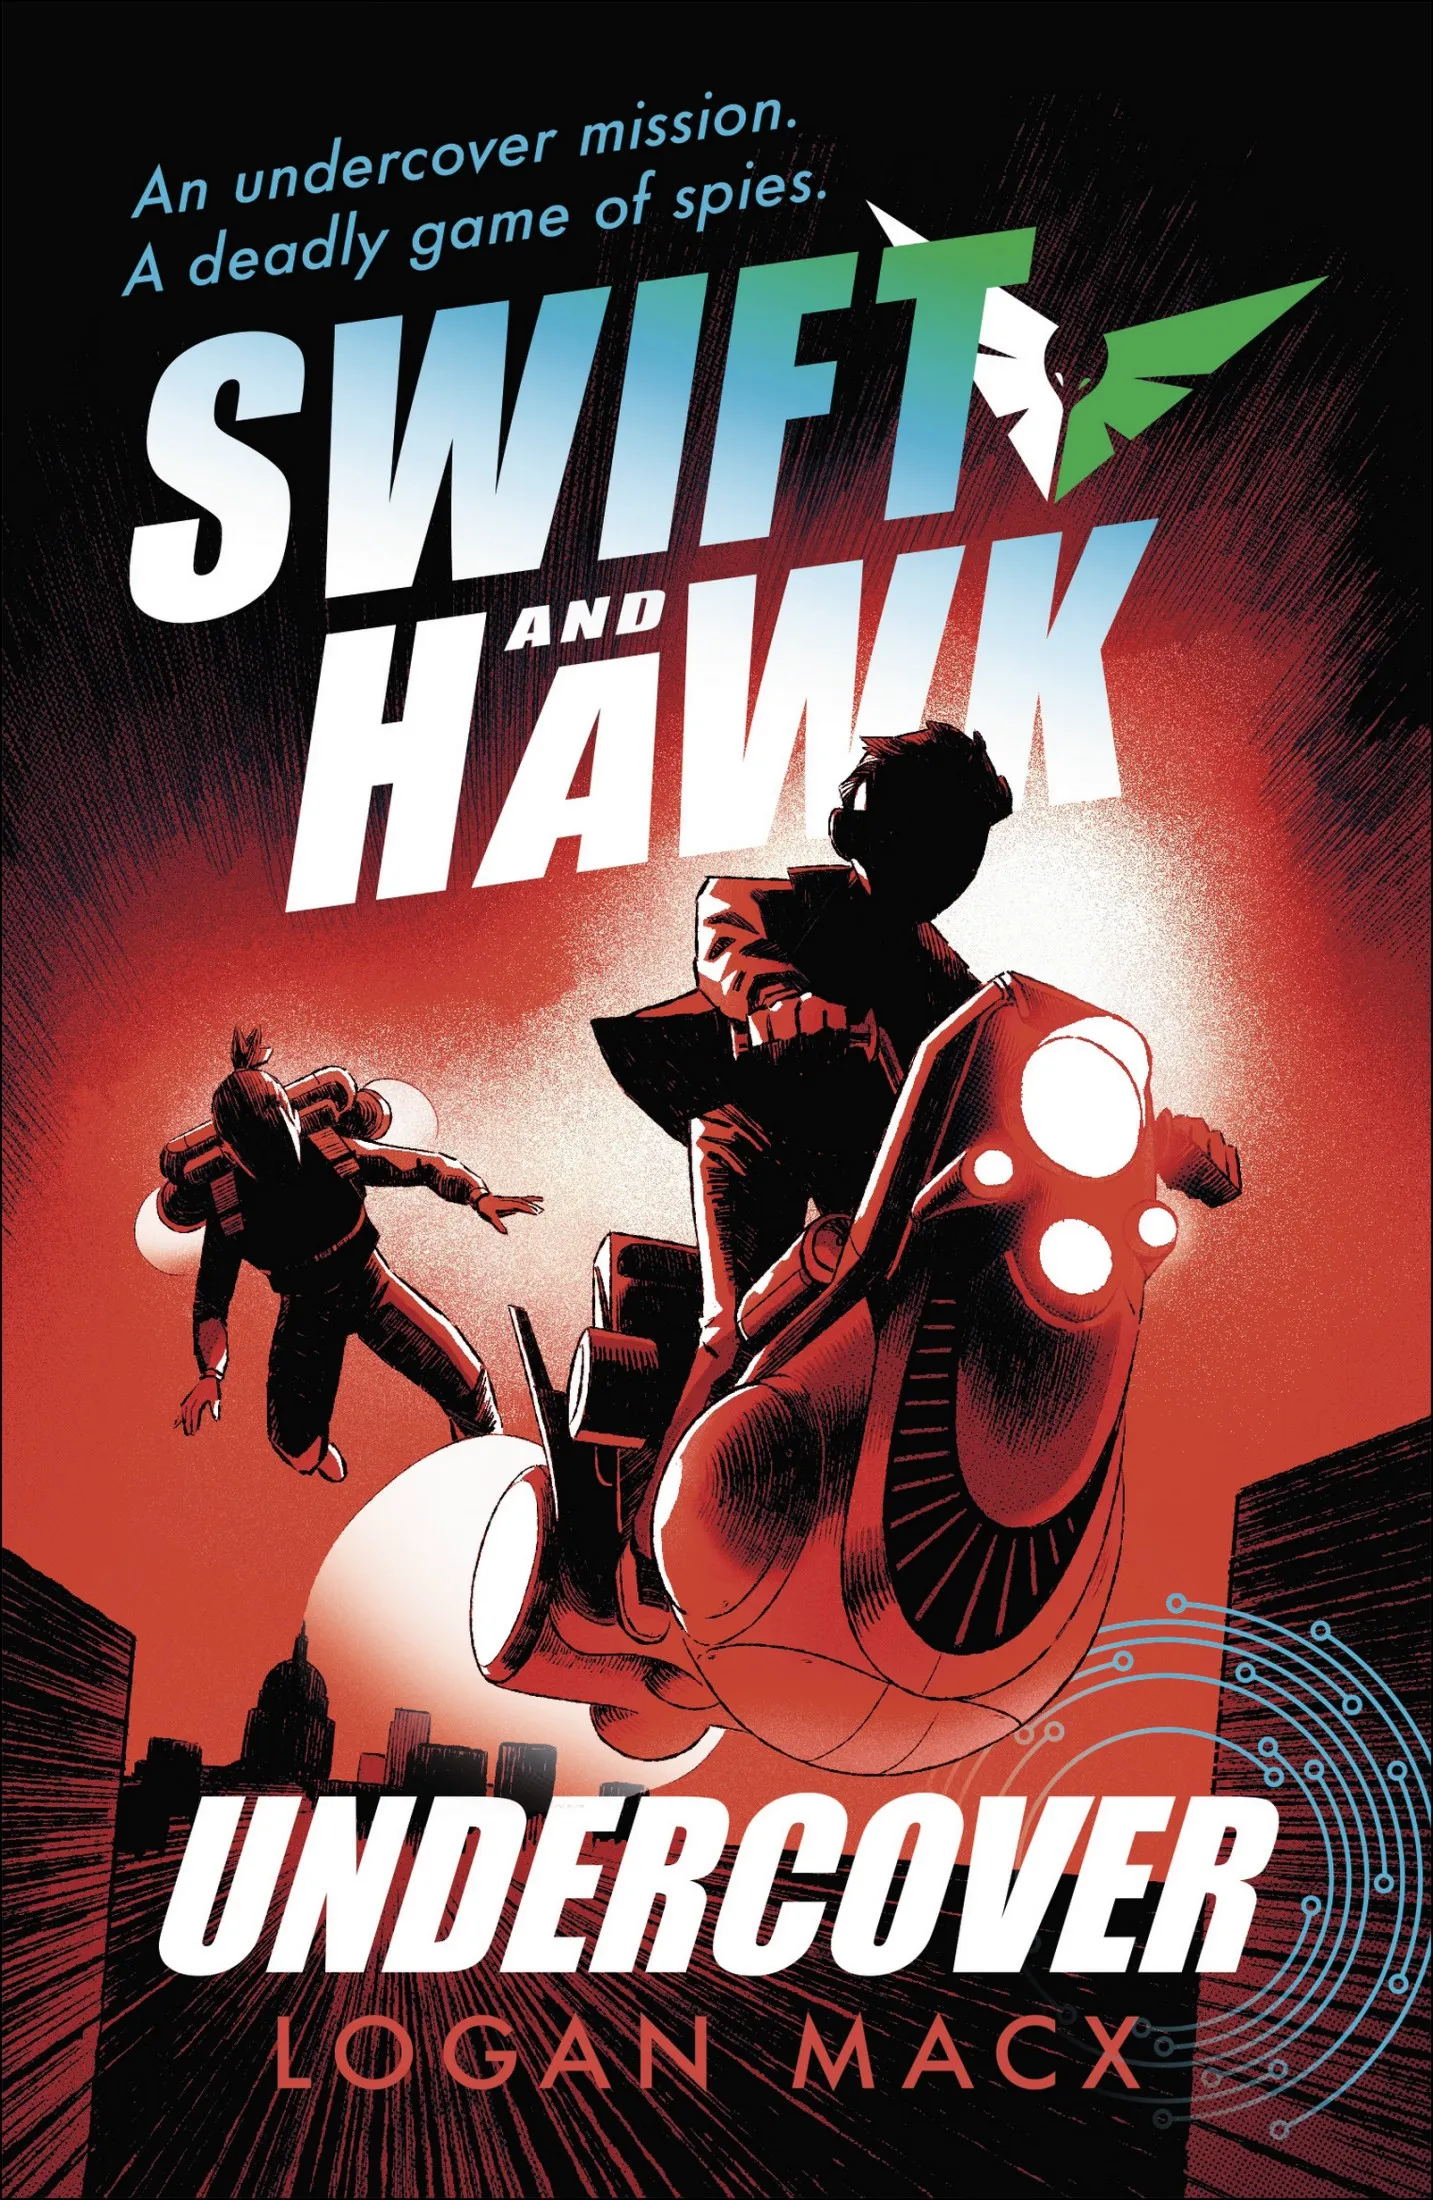 Undercover (Swift and Hawk #2)